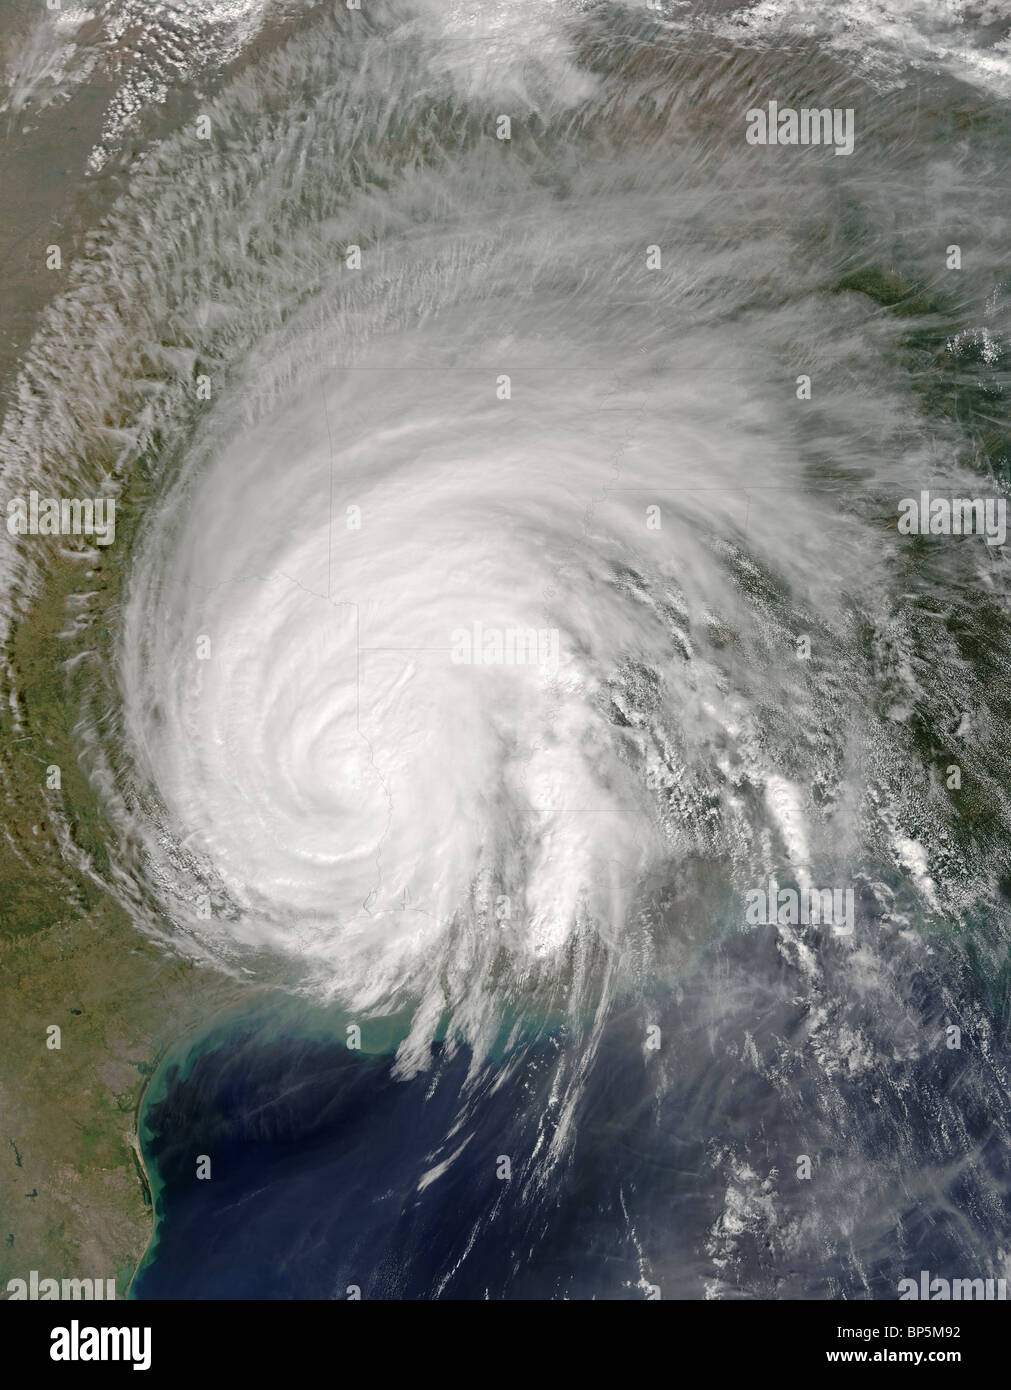 El Huracán Rita que azotara la costa del Golfo de EE.UU Del 24 de septiembre de 2005 Foto de stock